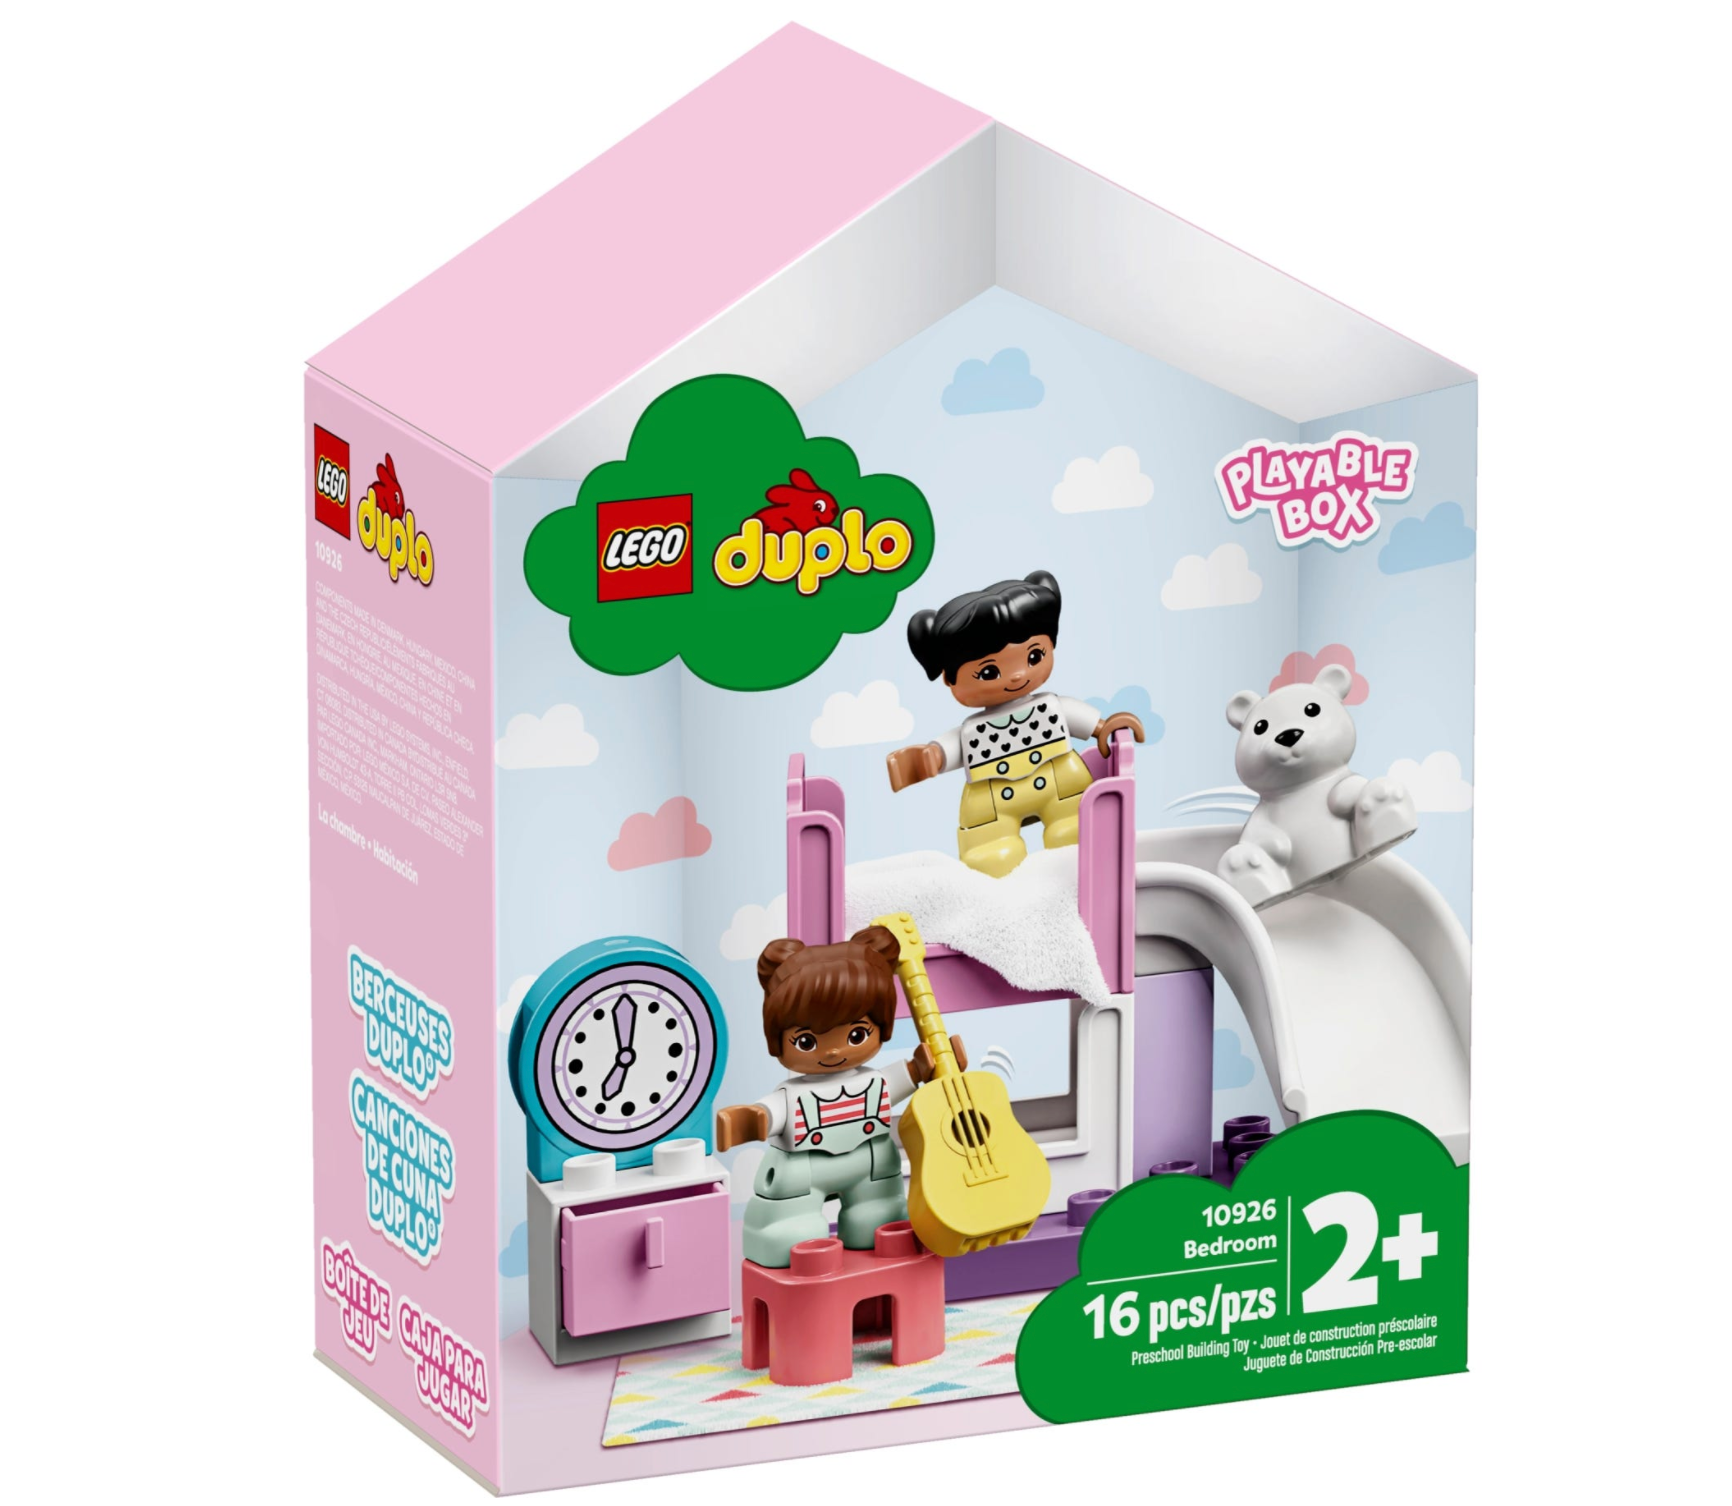 LEGO: DUPLO - Bedroom